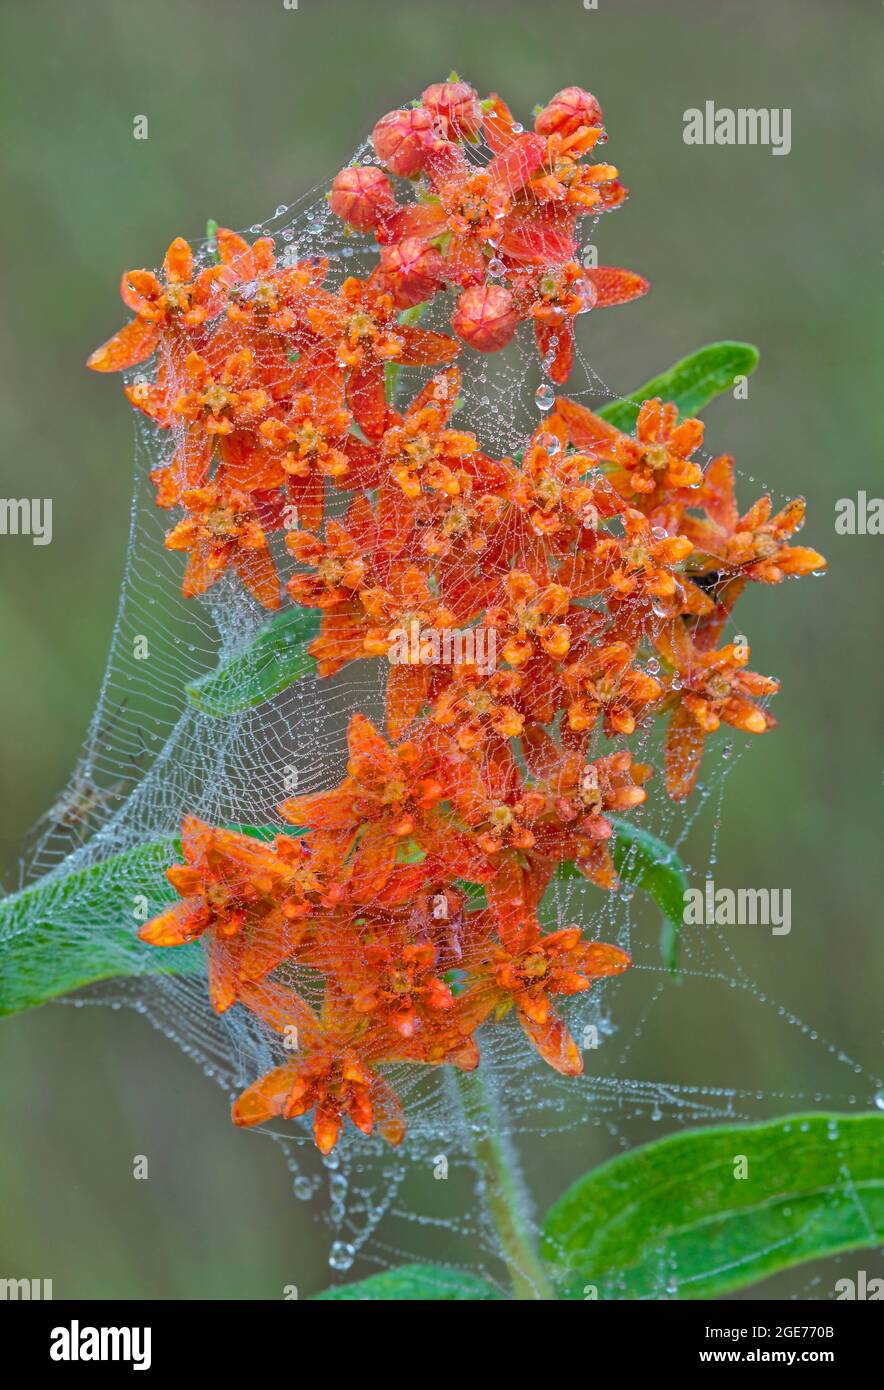 Schmetterlingsmilchkraut (Asclepias tuberosa) in voller Blüte, bedeckt mit taundem Spinnennetz, E USA, von Skip Moody/Dembinsky Photo Assoc Stockfoto